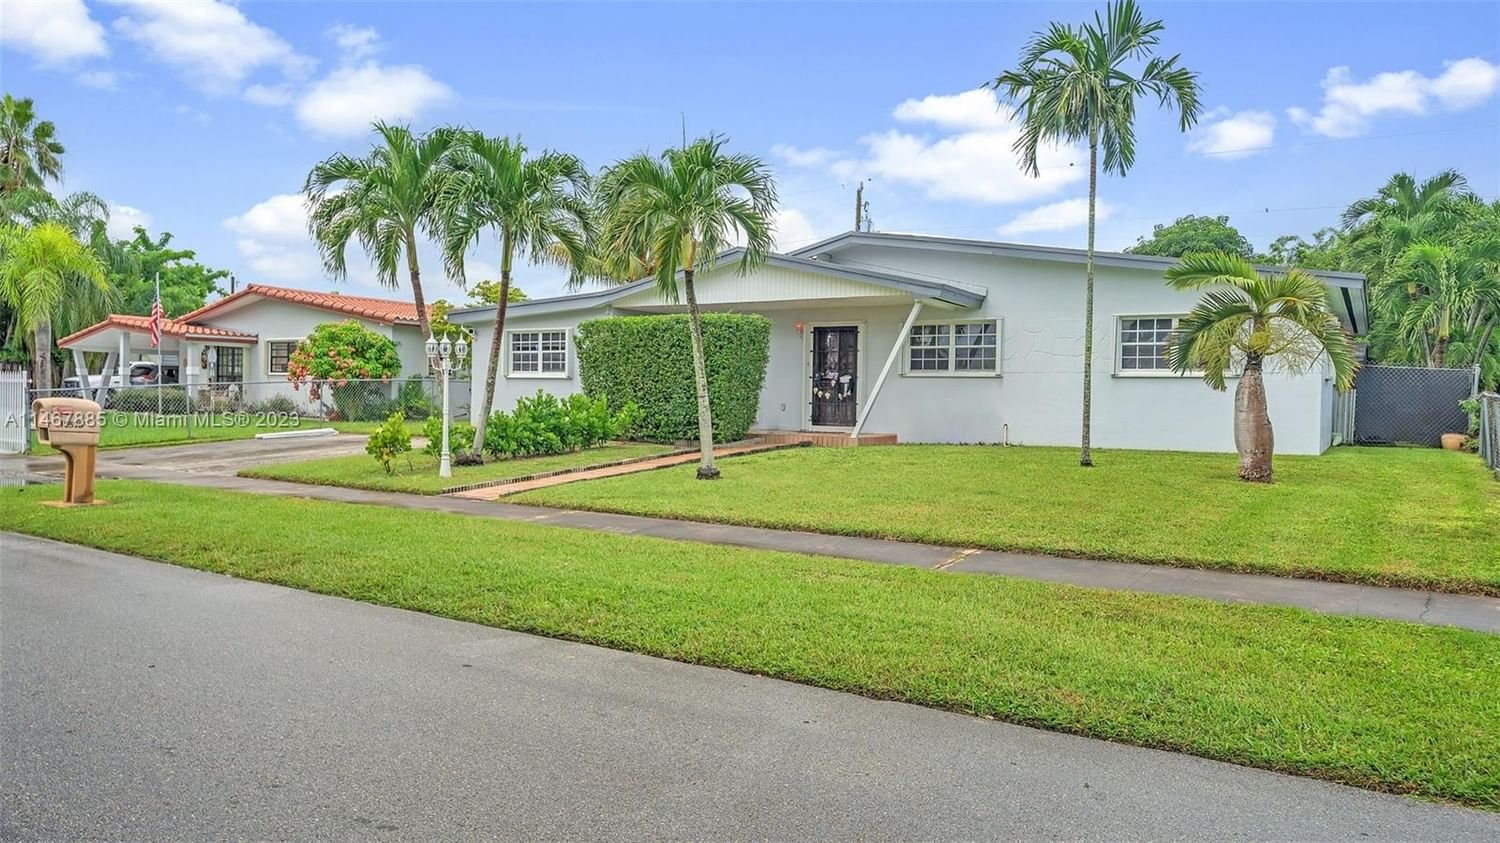 Real estate property located at 12525 188th Ter, Miami-Dade County, Miami, FL